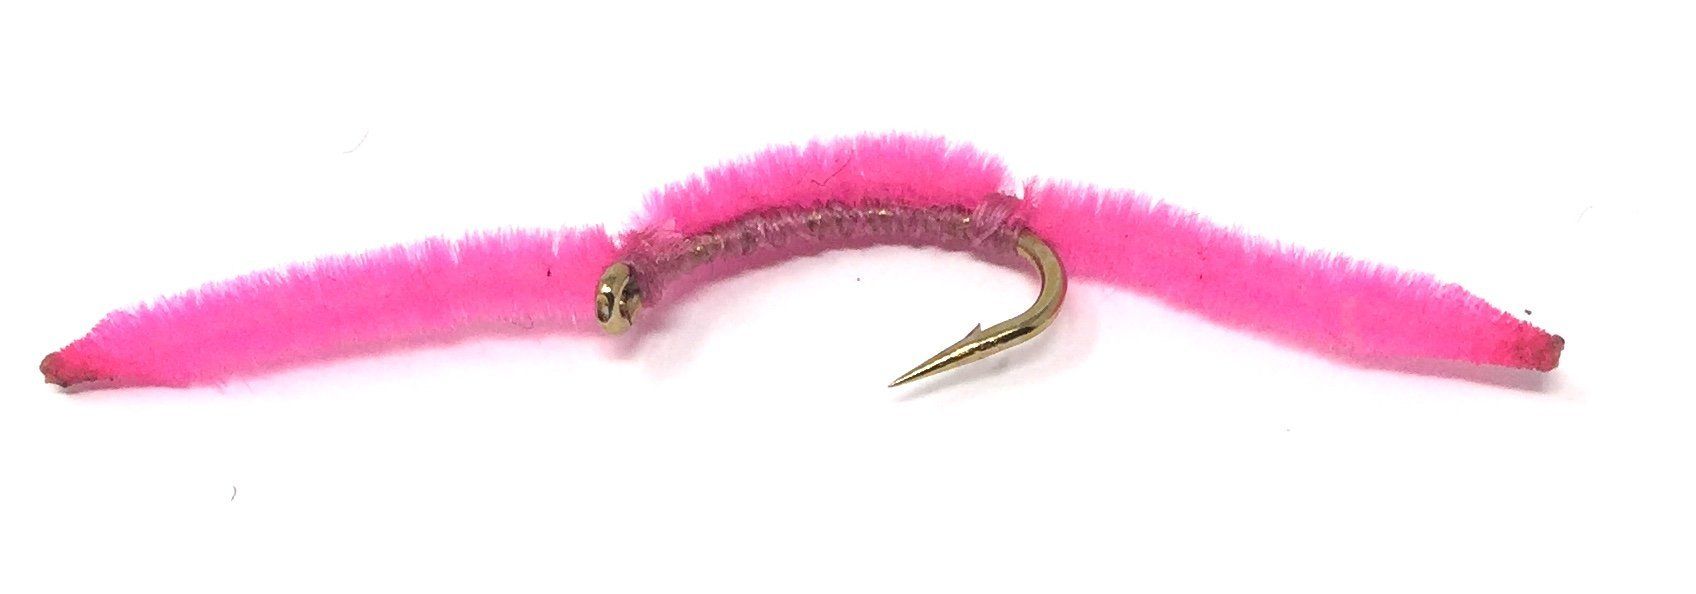 Feeder Creek San Juan Worm Pink Fly Fishing Trout Flies Size 16,18